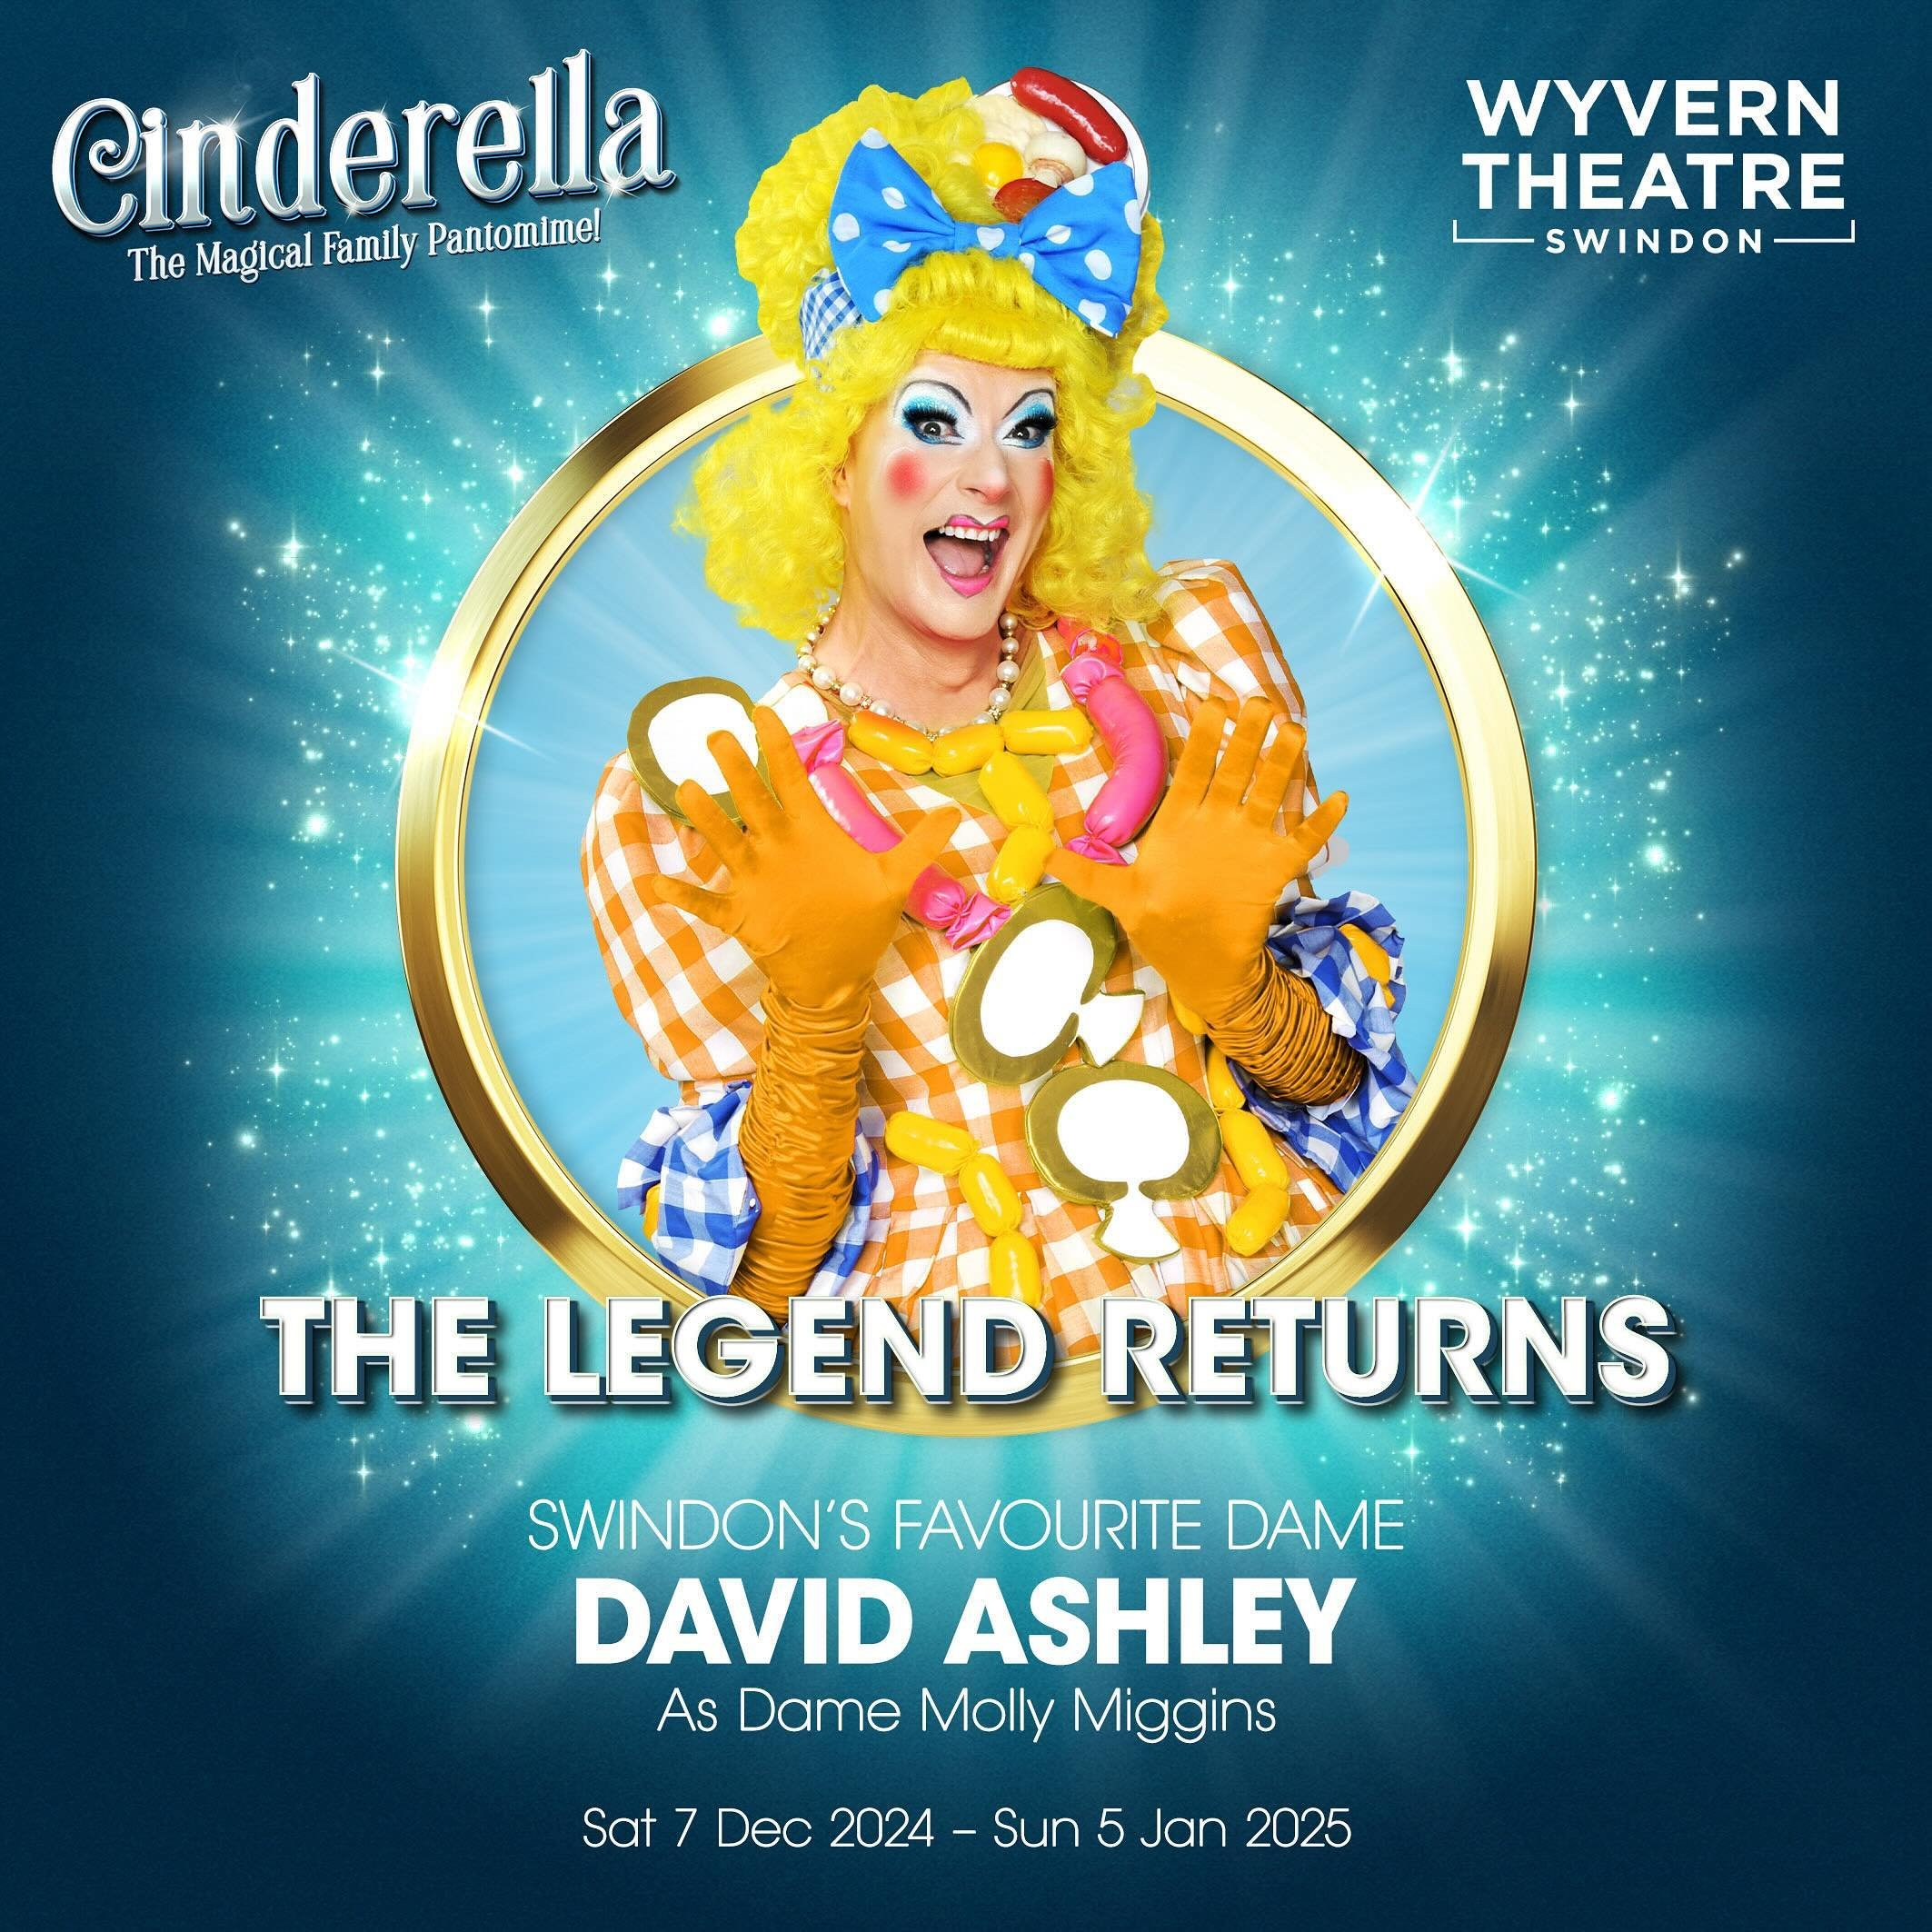 The brilliant David Ashley returns to Swindon as Dame Molly Miggins in the magical pantomime Cinderella!

#aveit #panto #swindonpanto 
@wyverntheatre @dashley.austin